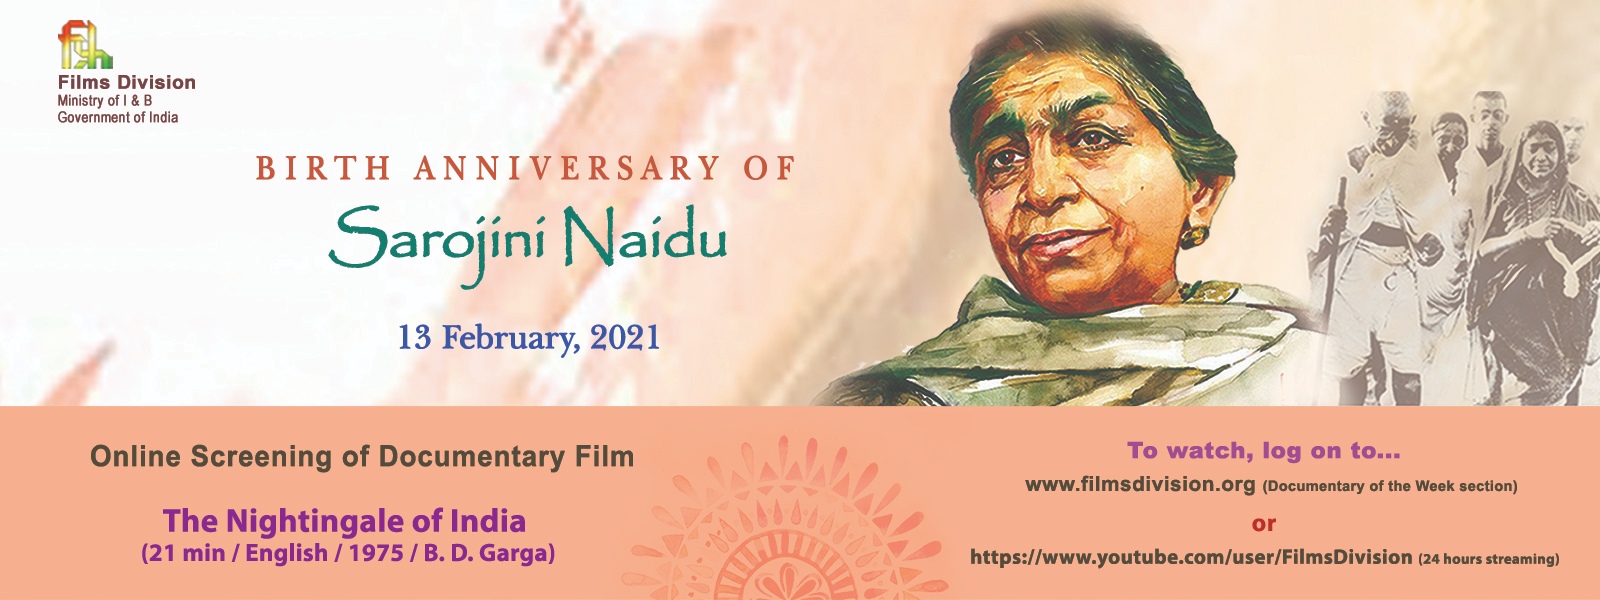 Biopic to be streamed as tribute to Sarojini Naidu